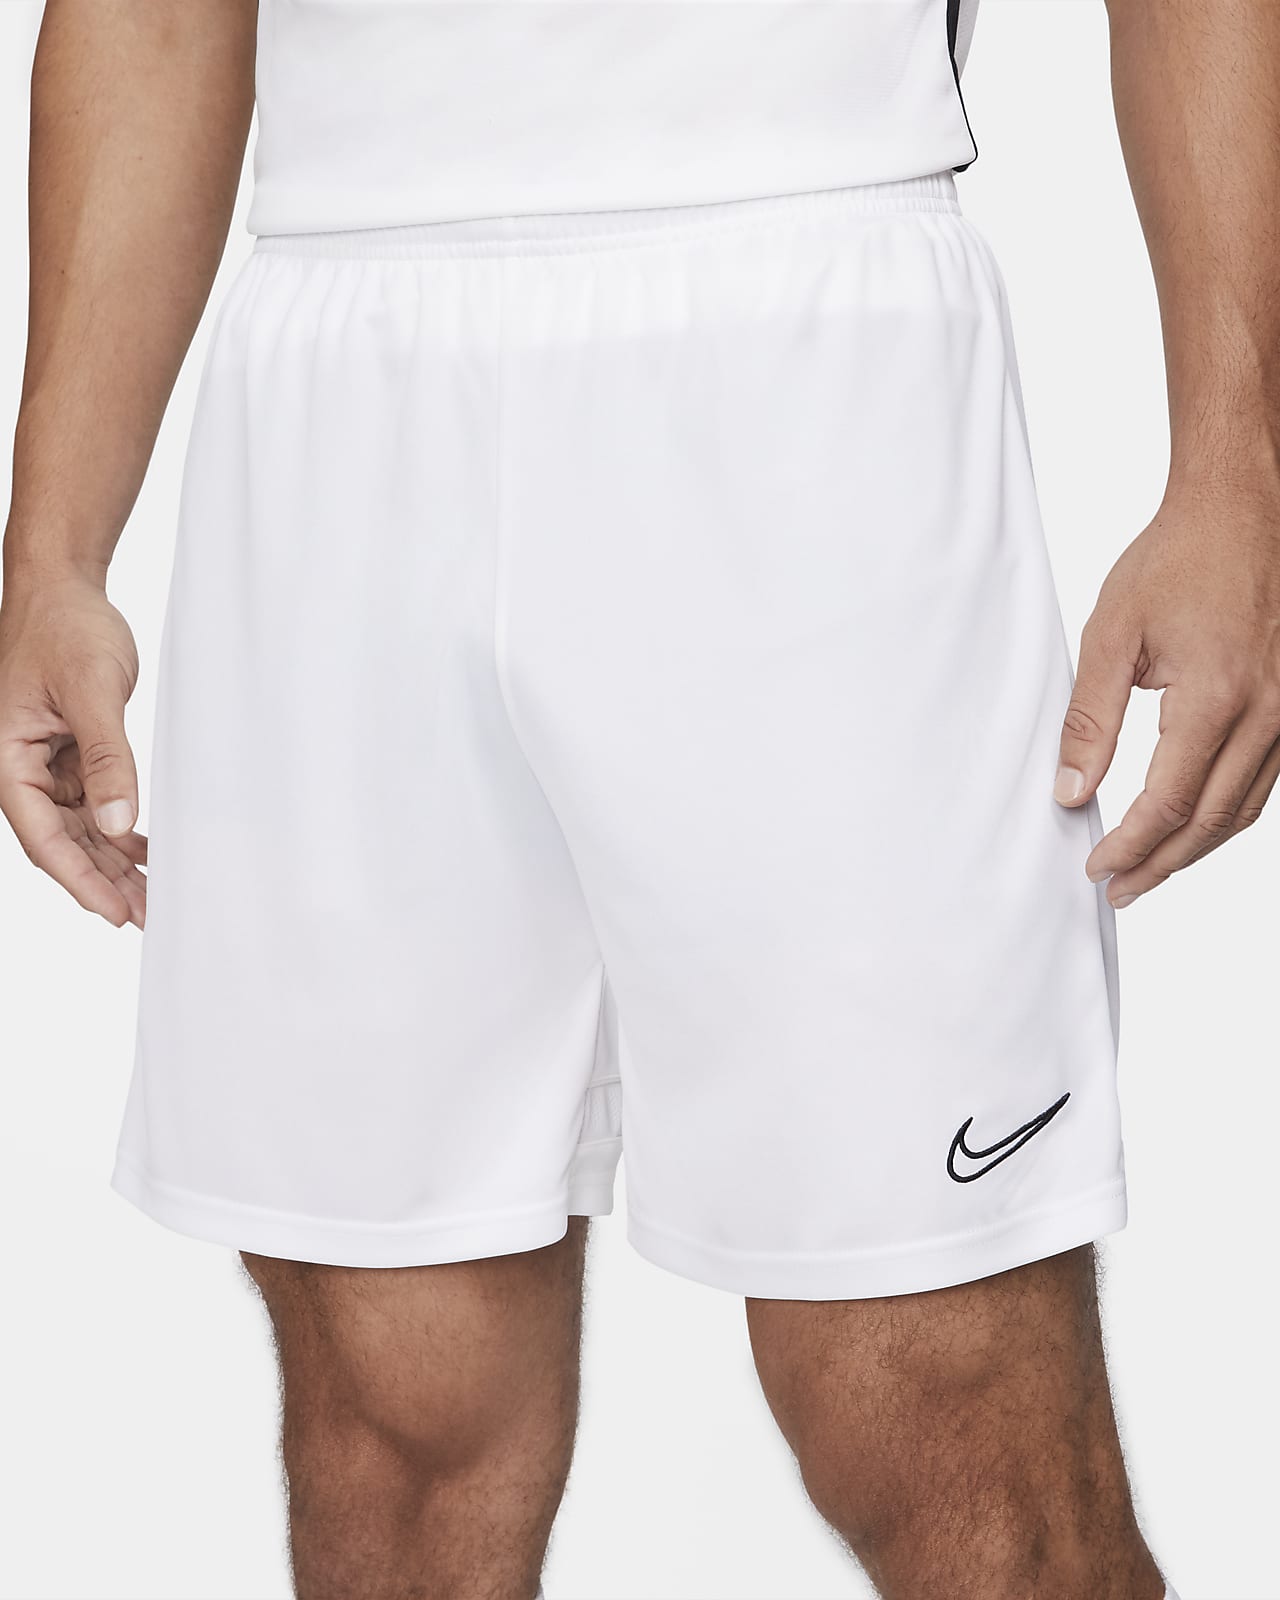 PANTALON CORTO Nike Dri-fit Academy 
Mens Knit Soccer Shorts BLANCO